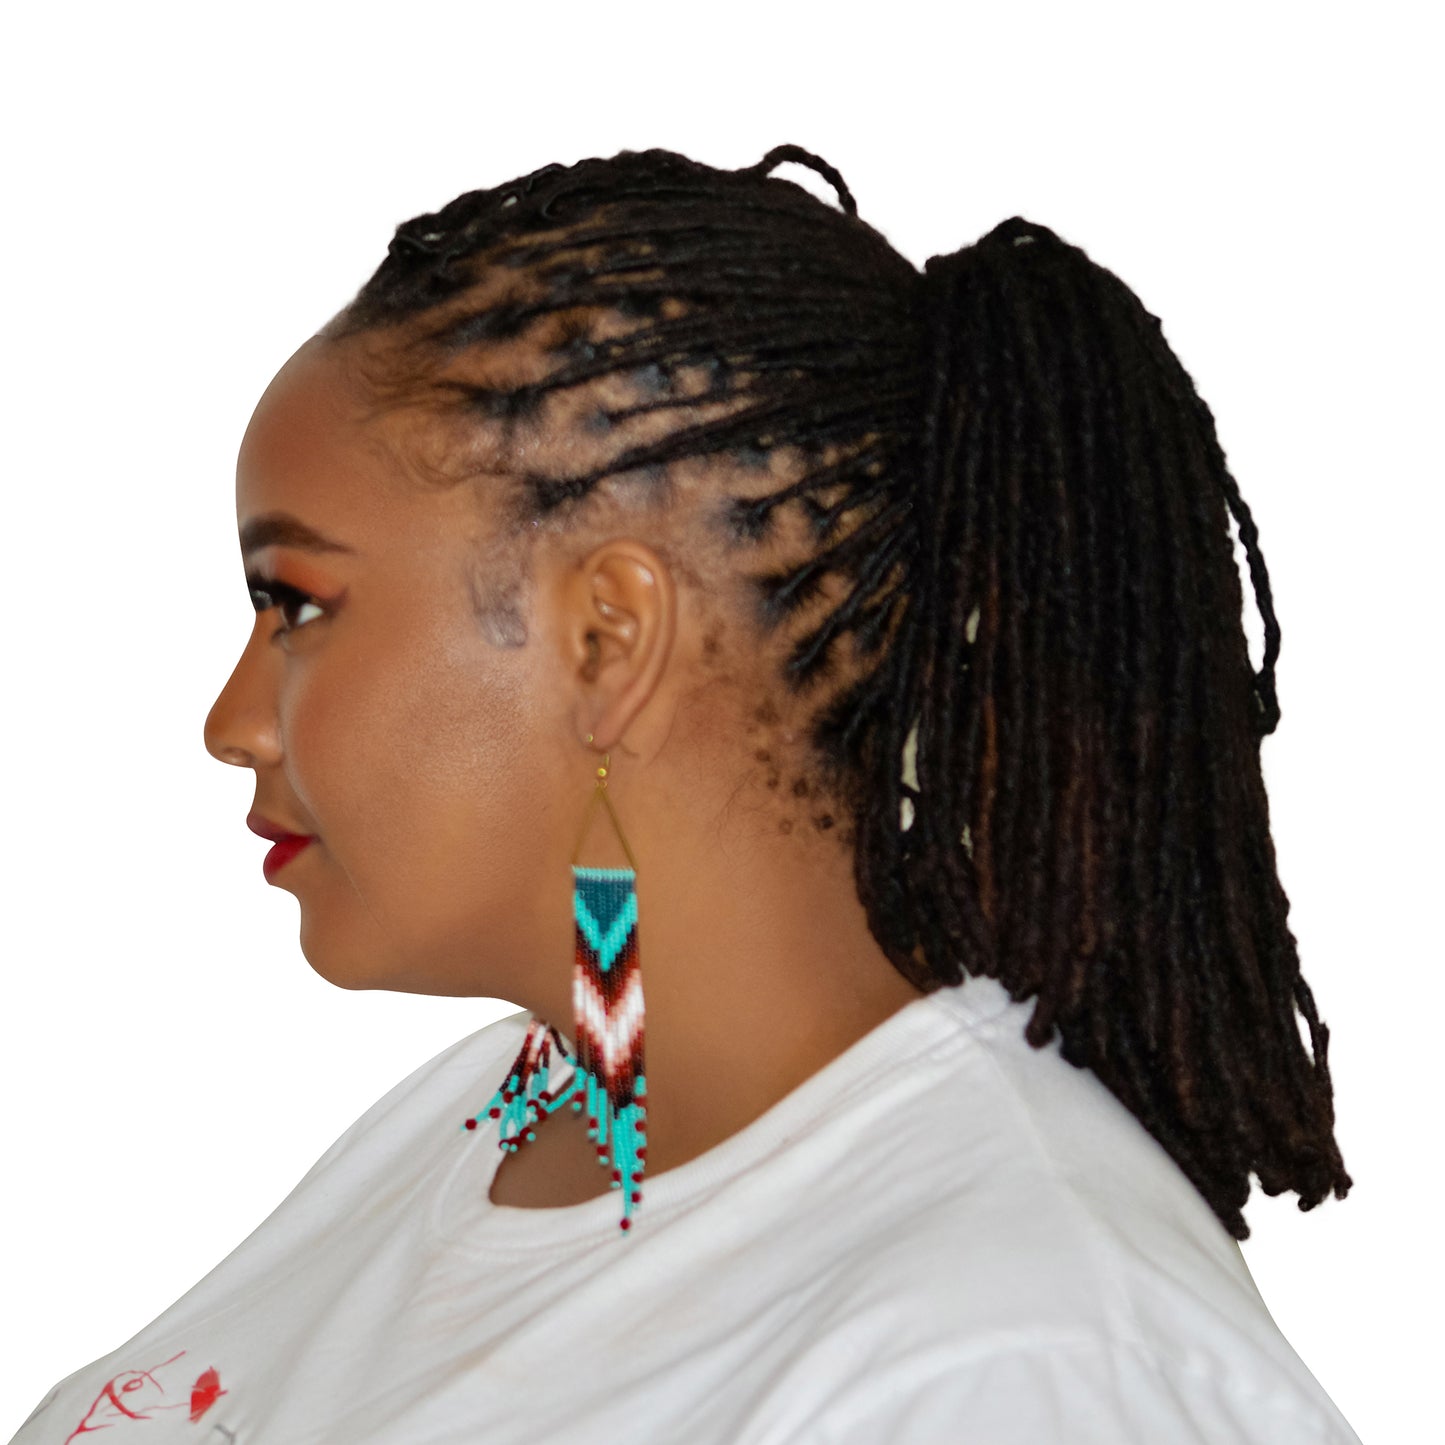 Angela earrings Beaded ombre Bohemian fringe earrings Seed bead long natural color palette turquoise orange native dangle earrings